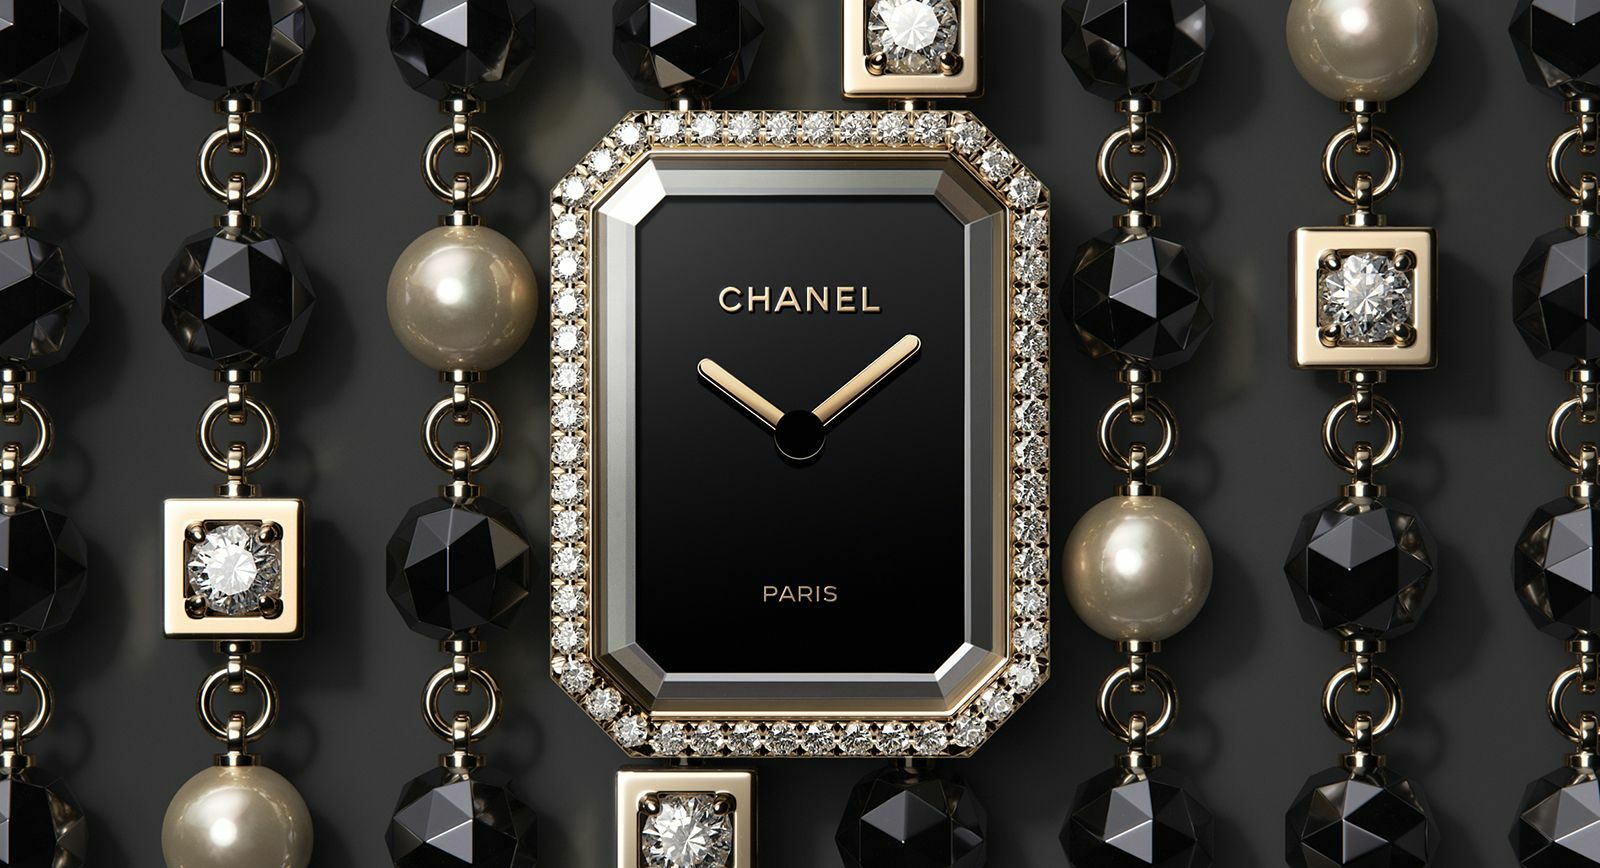 Chanel Mademoiselle Privé manchette watch